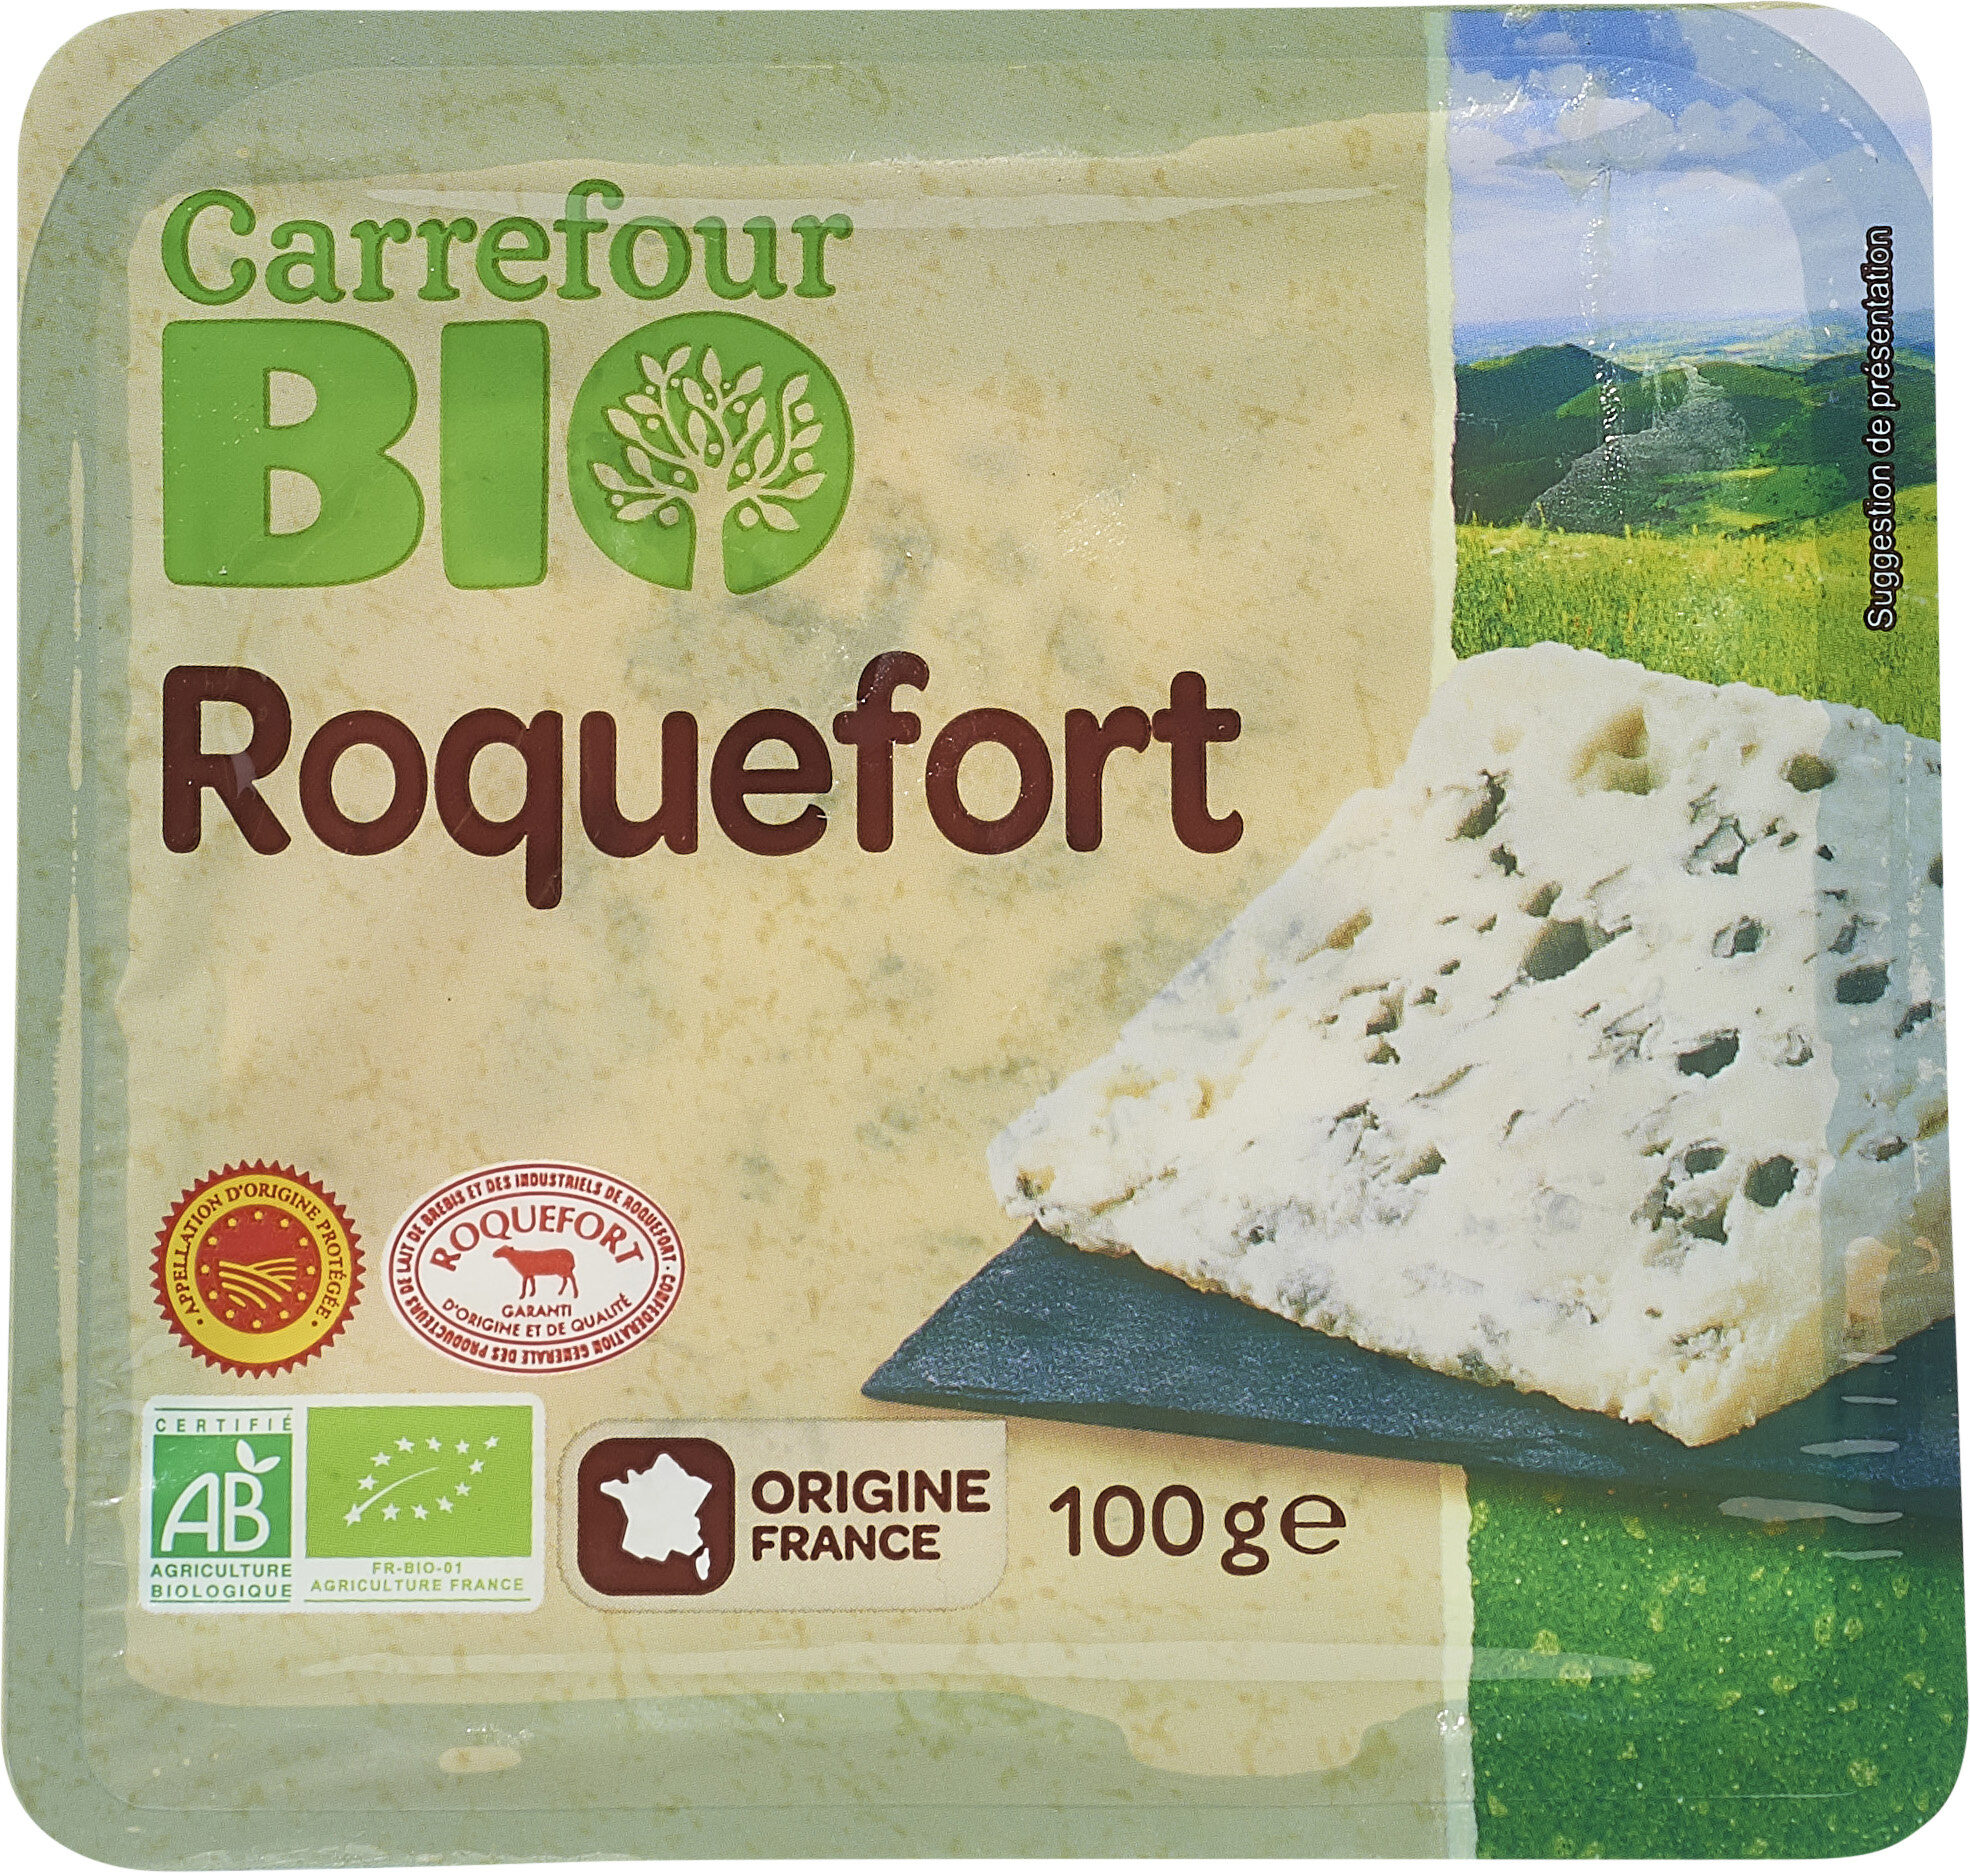 Roquefort - Product - fr